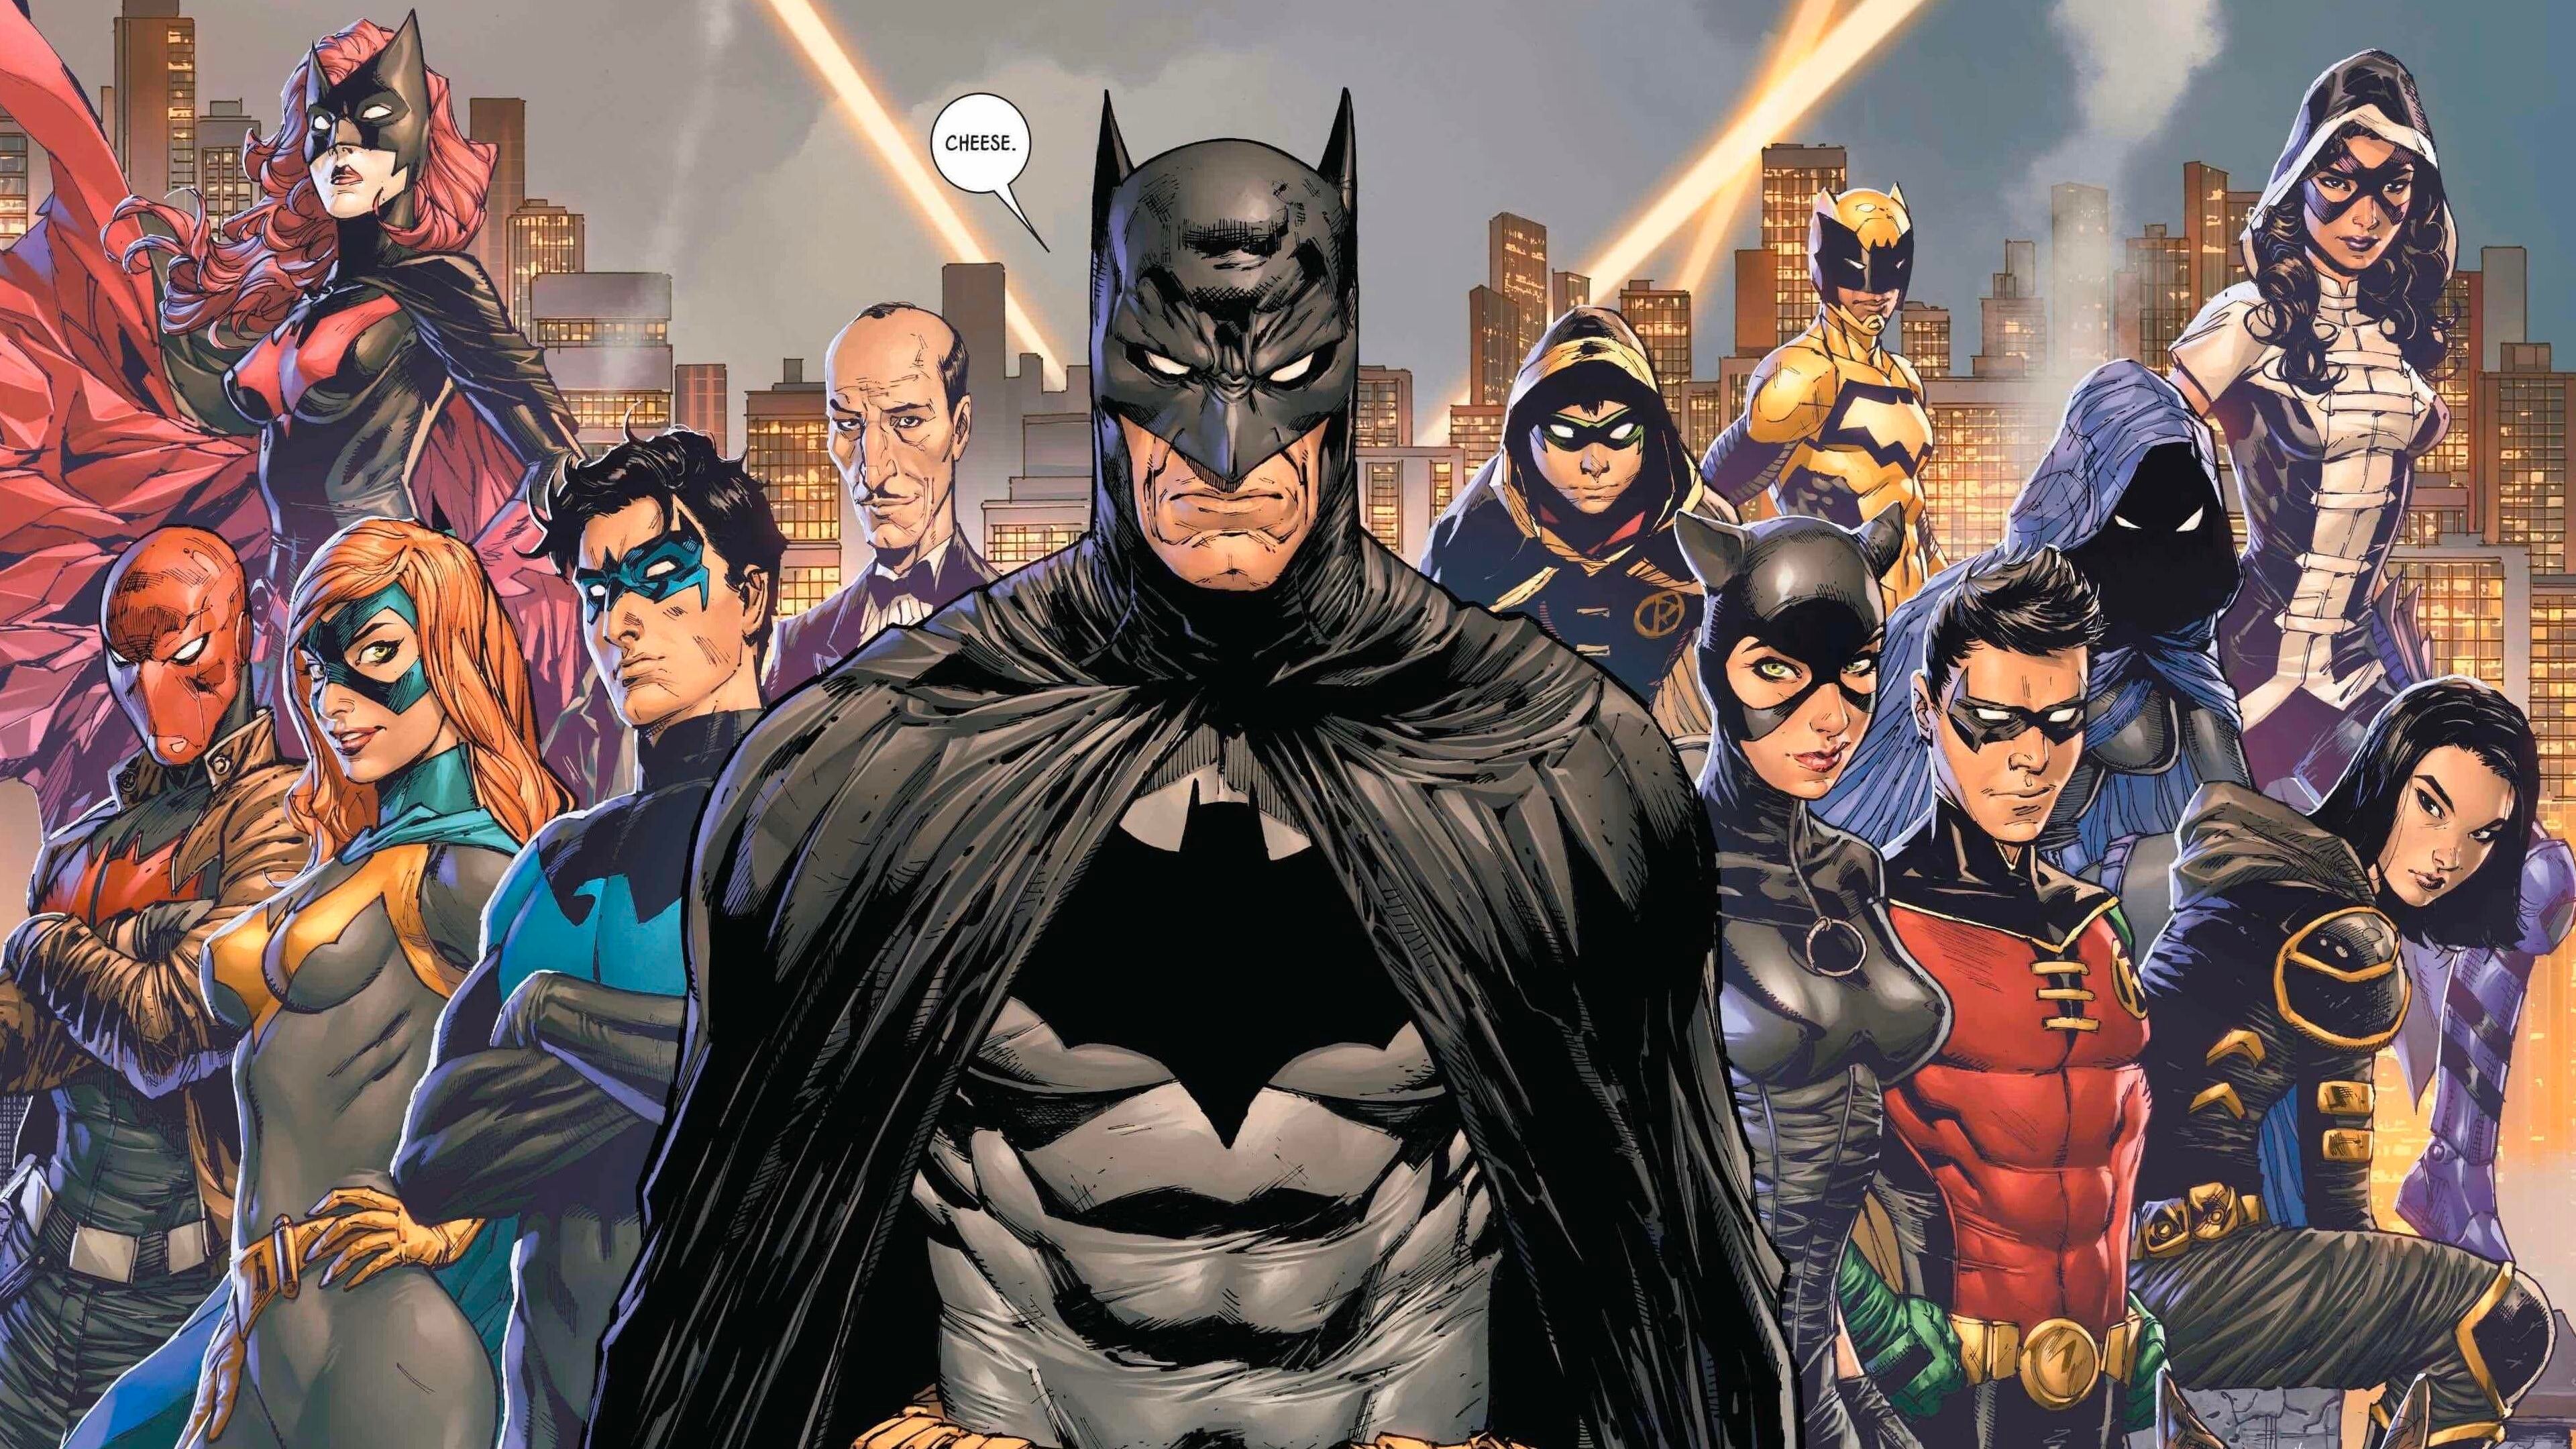 Batman says cheese for the posing Bat-family